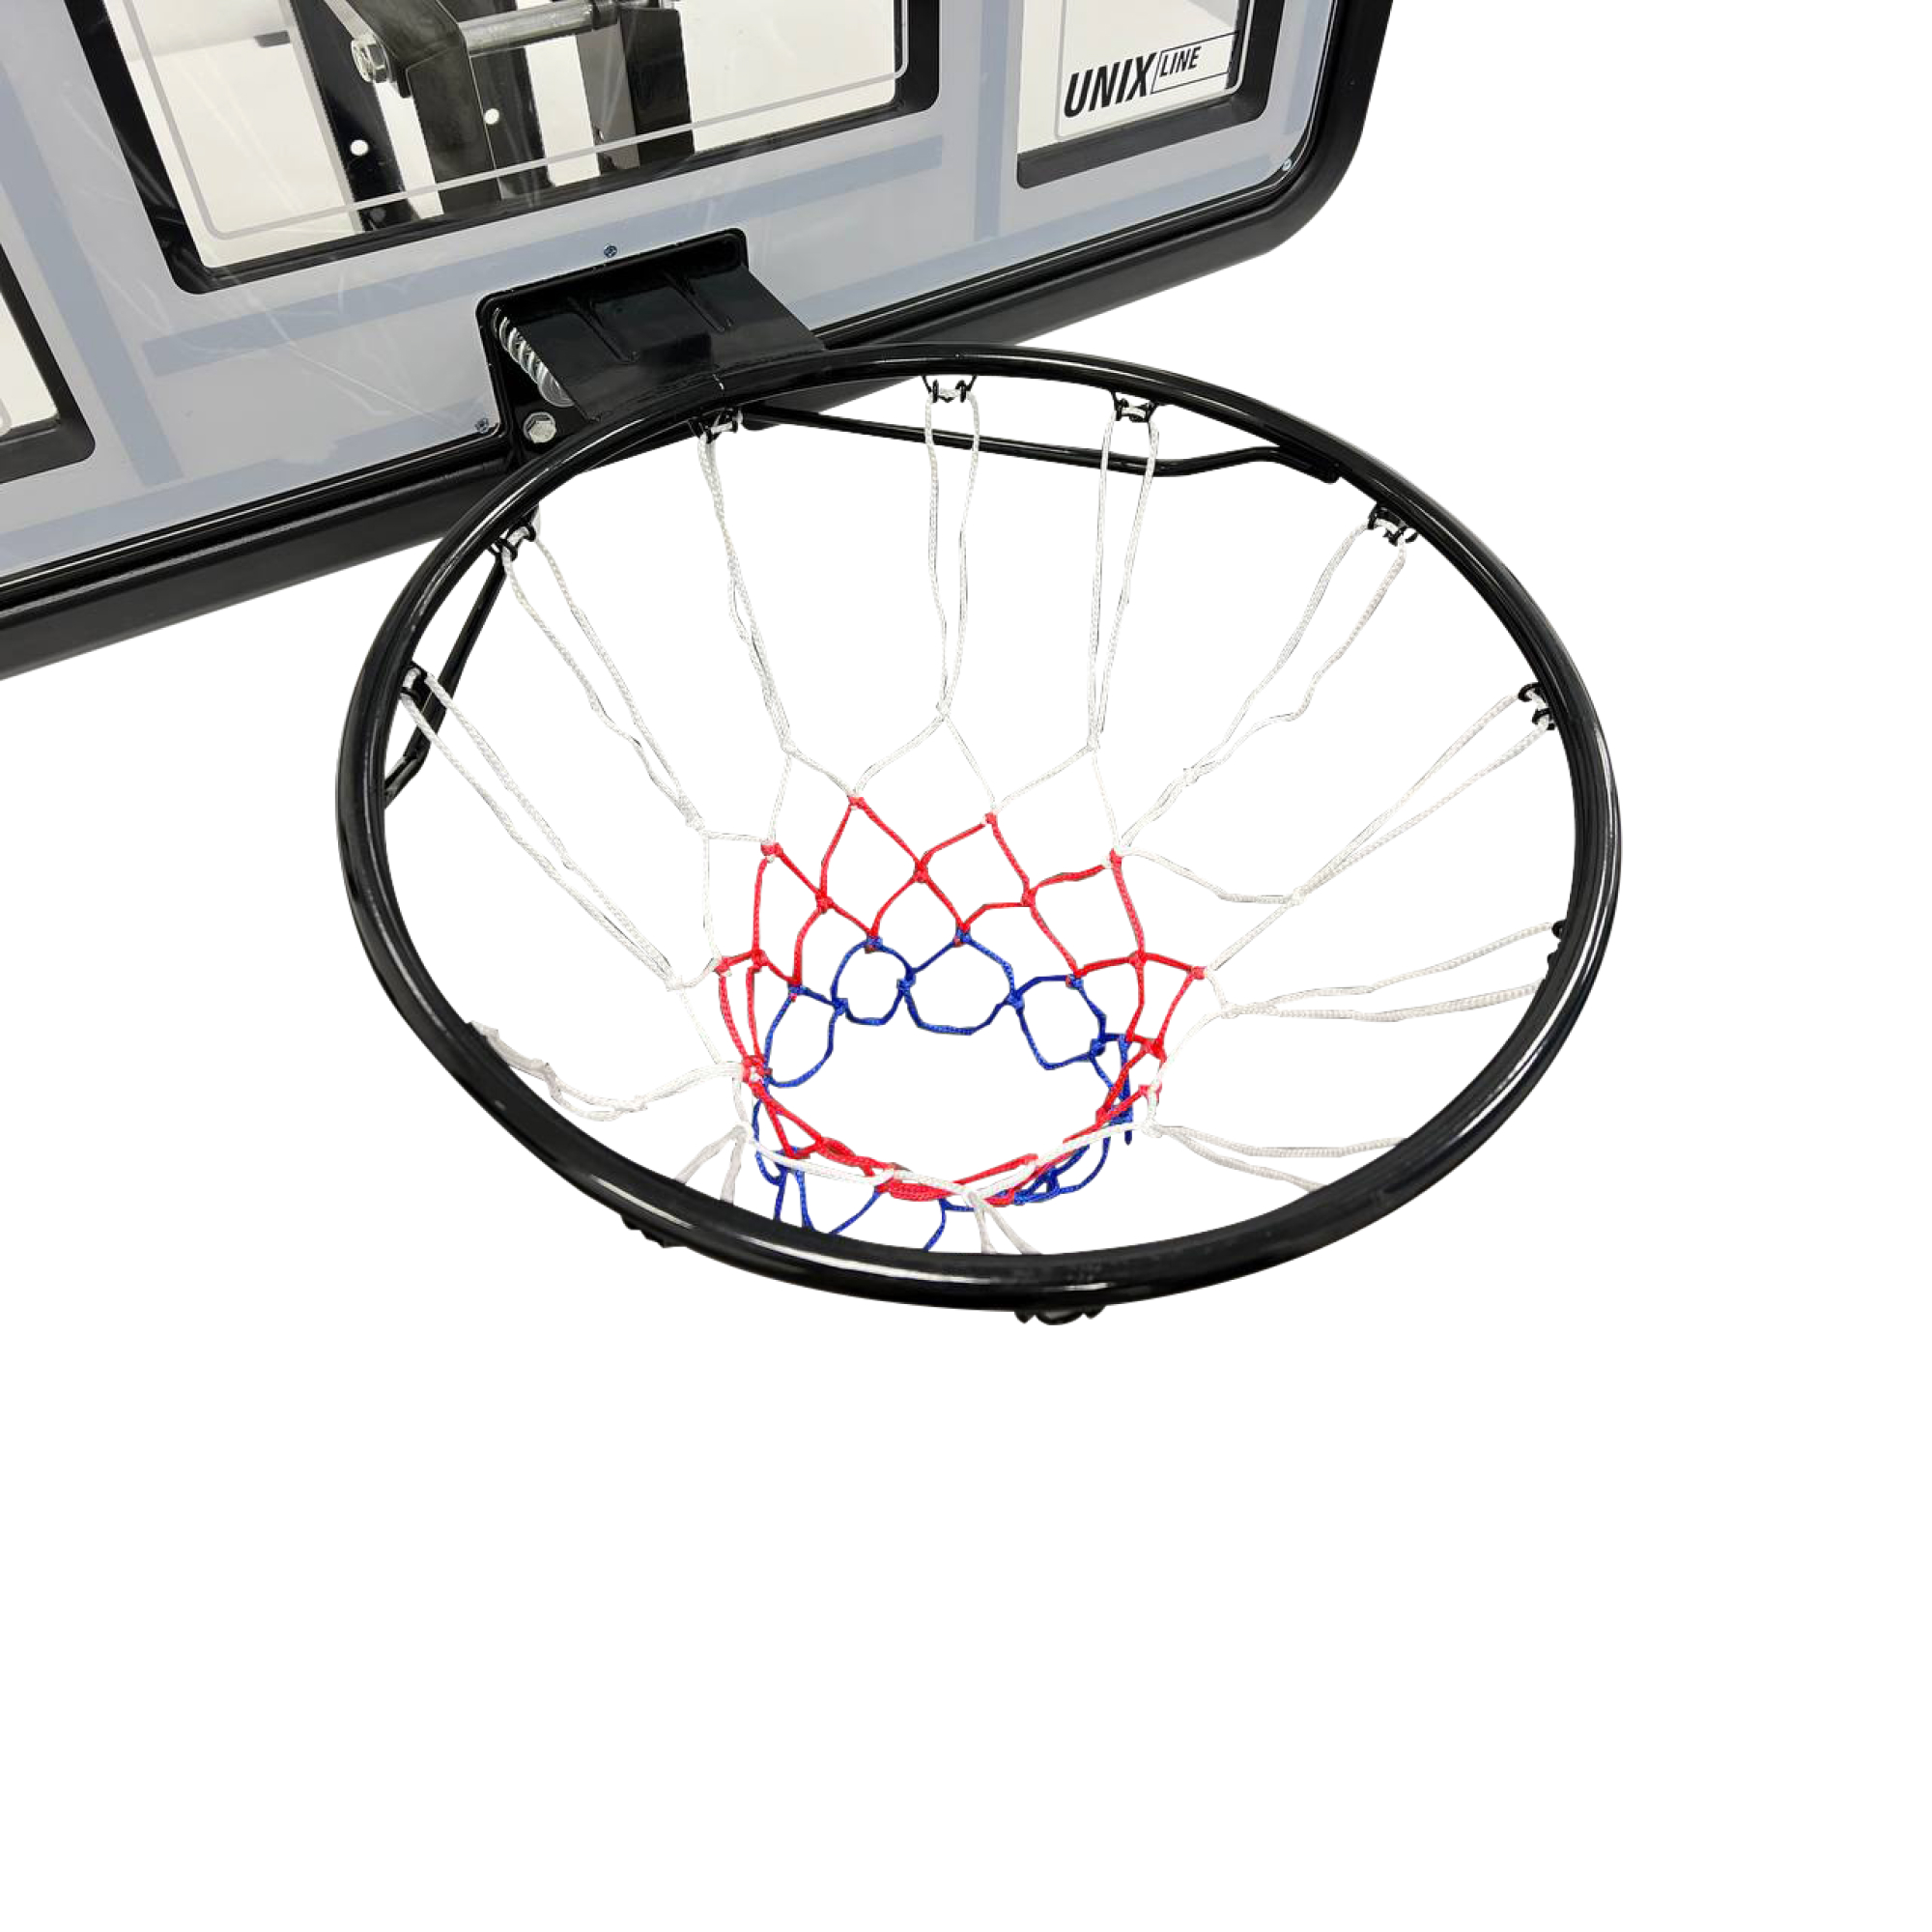 Баскетбольный щит Unix Line B-Backboard-PVC 44"x30" R45 BSBS44PVCBK 2000_2000